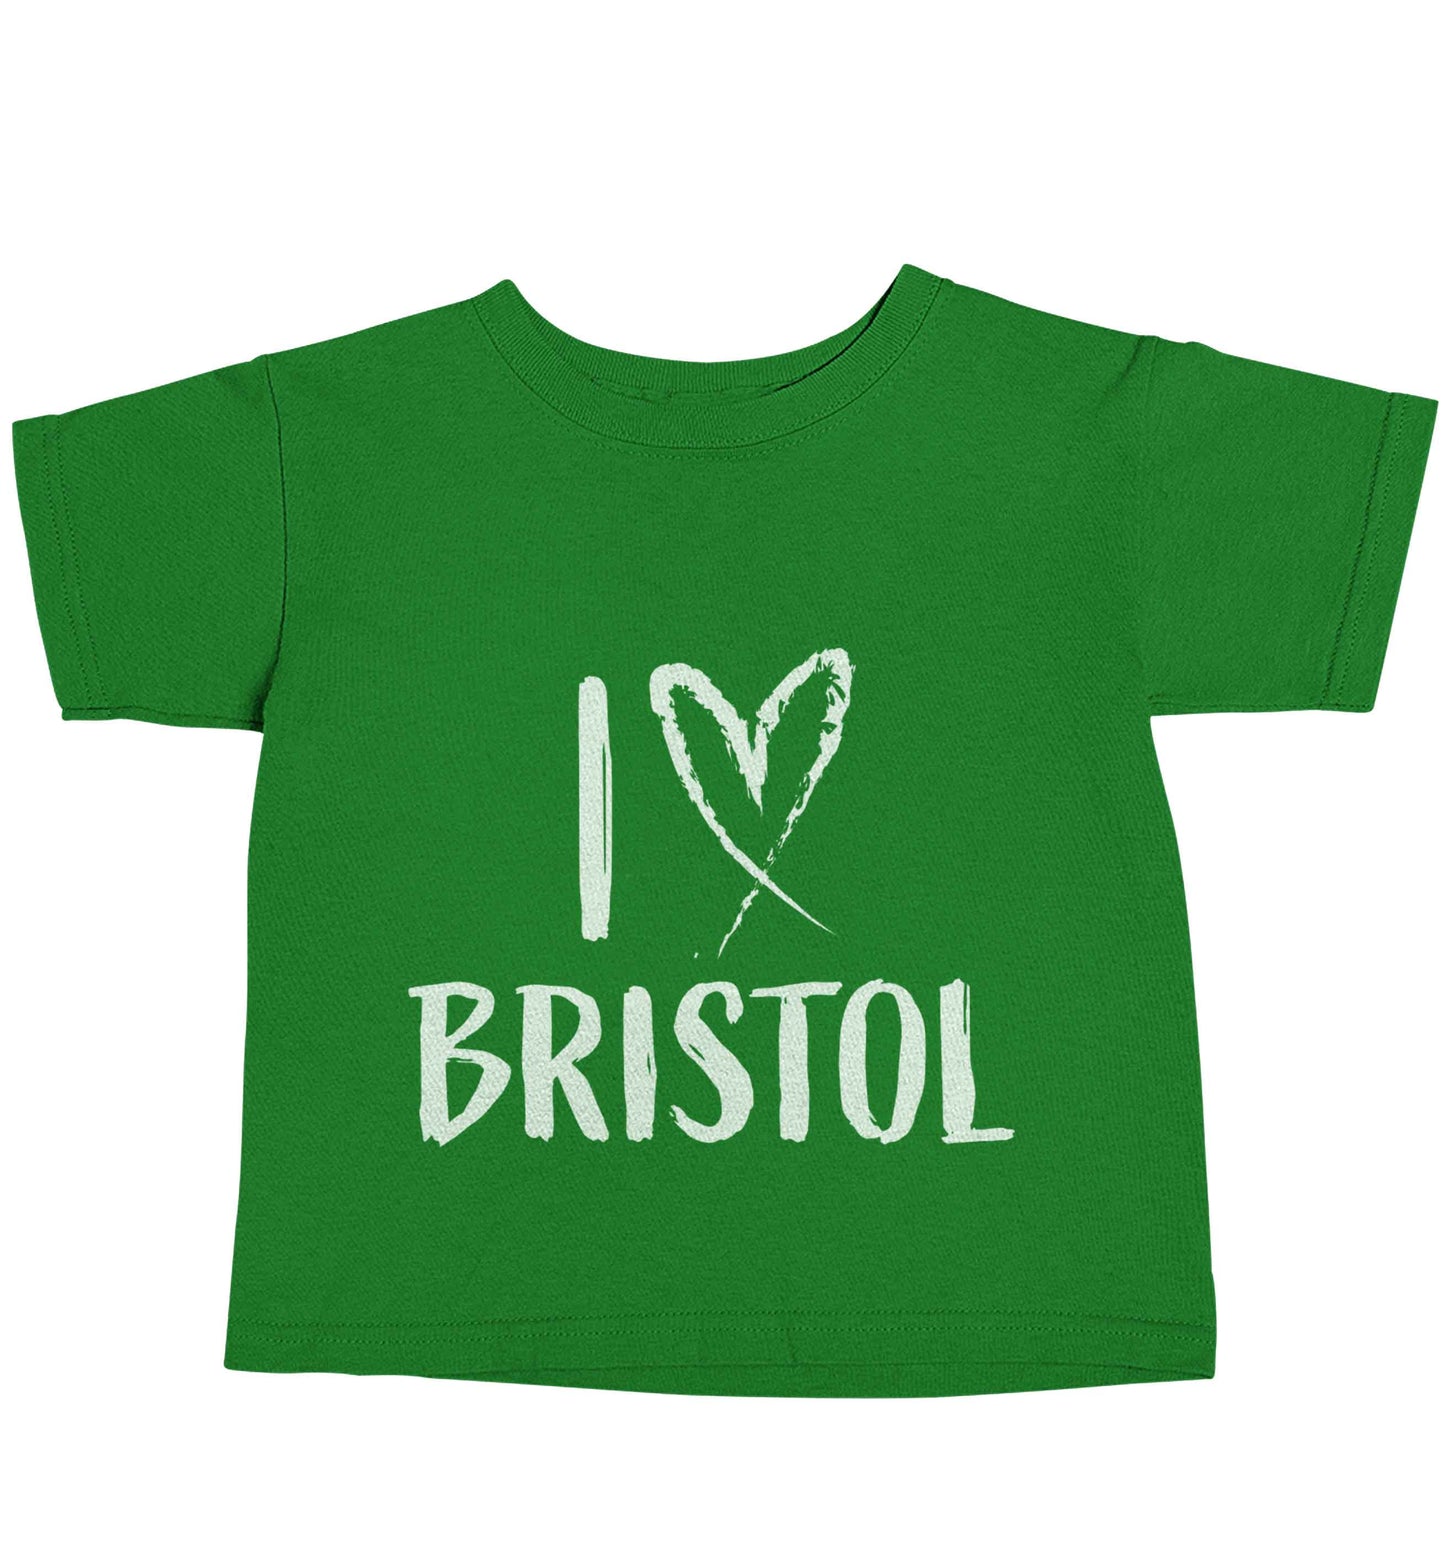 I love Bristol green baby toddler Tshirt 2 Years